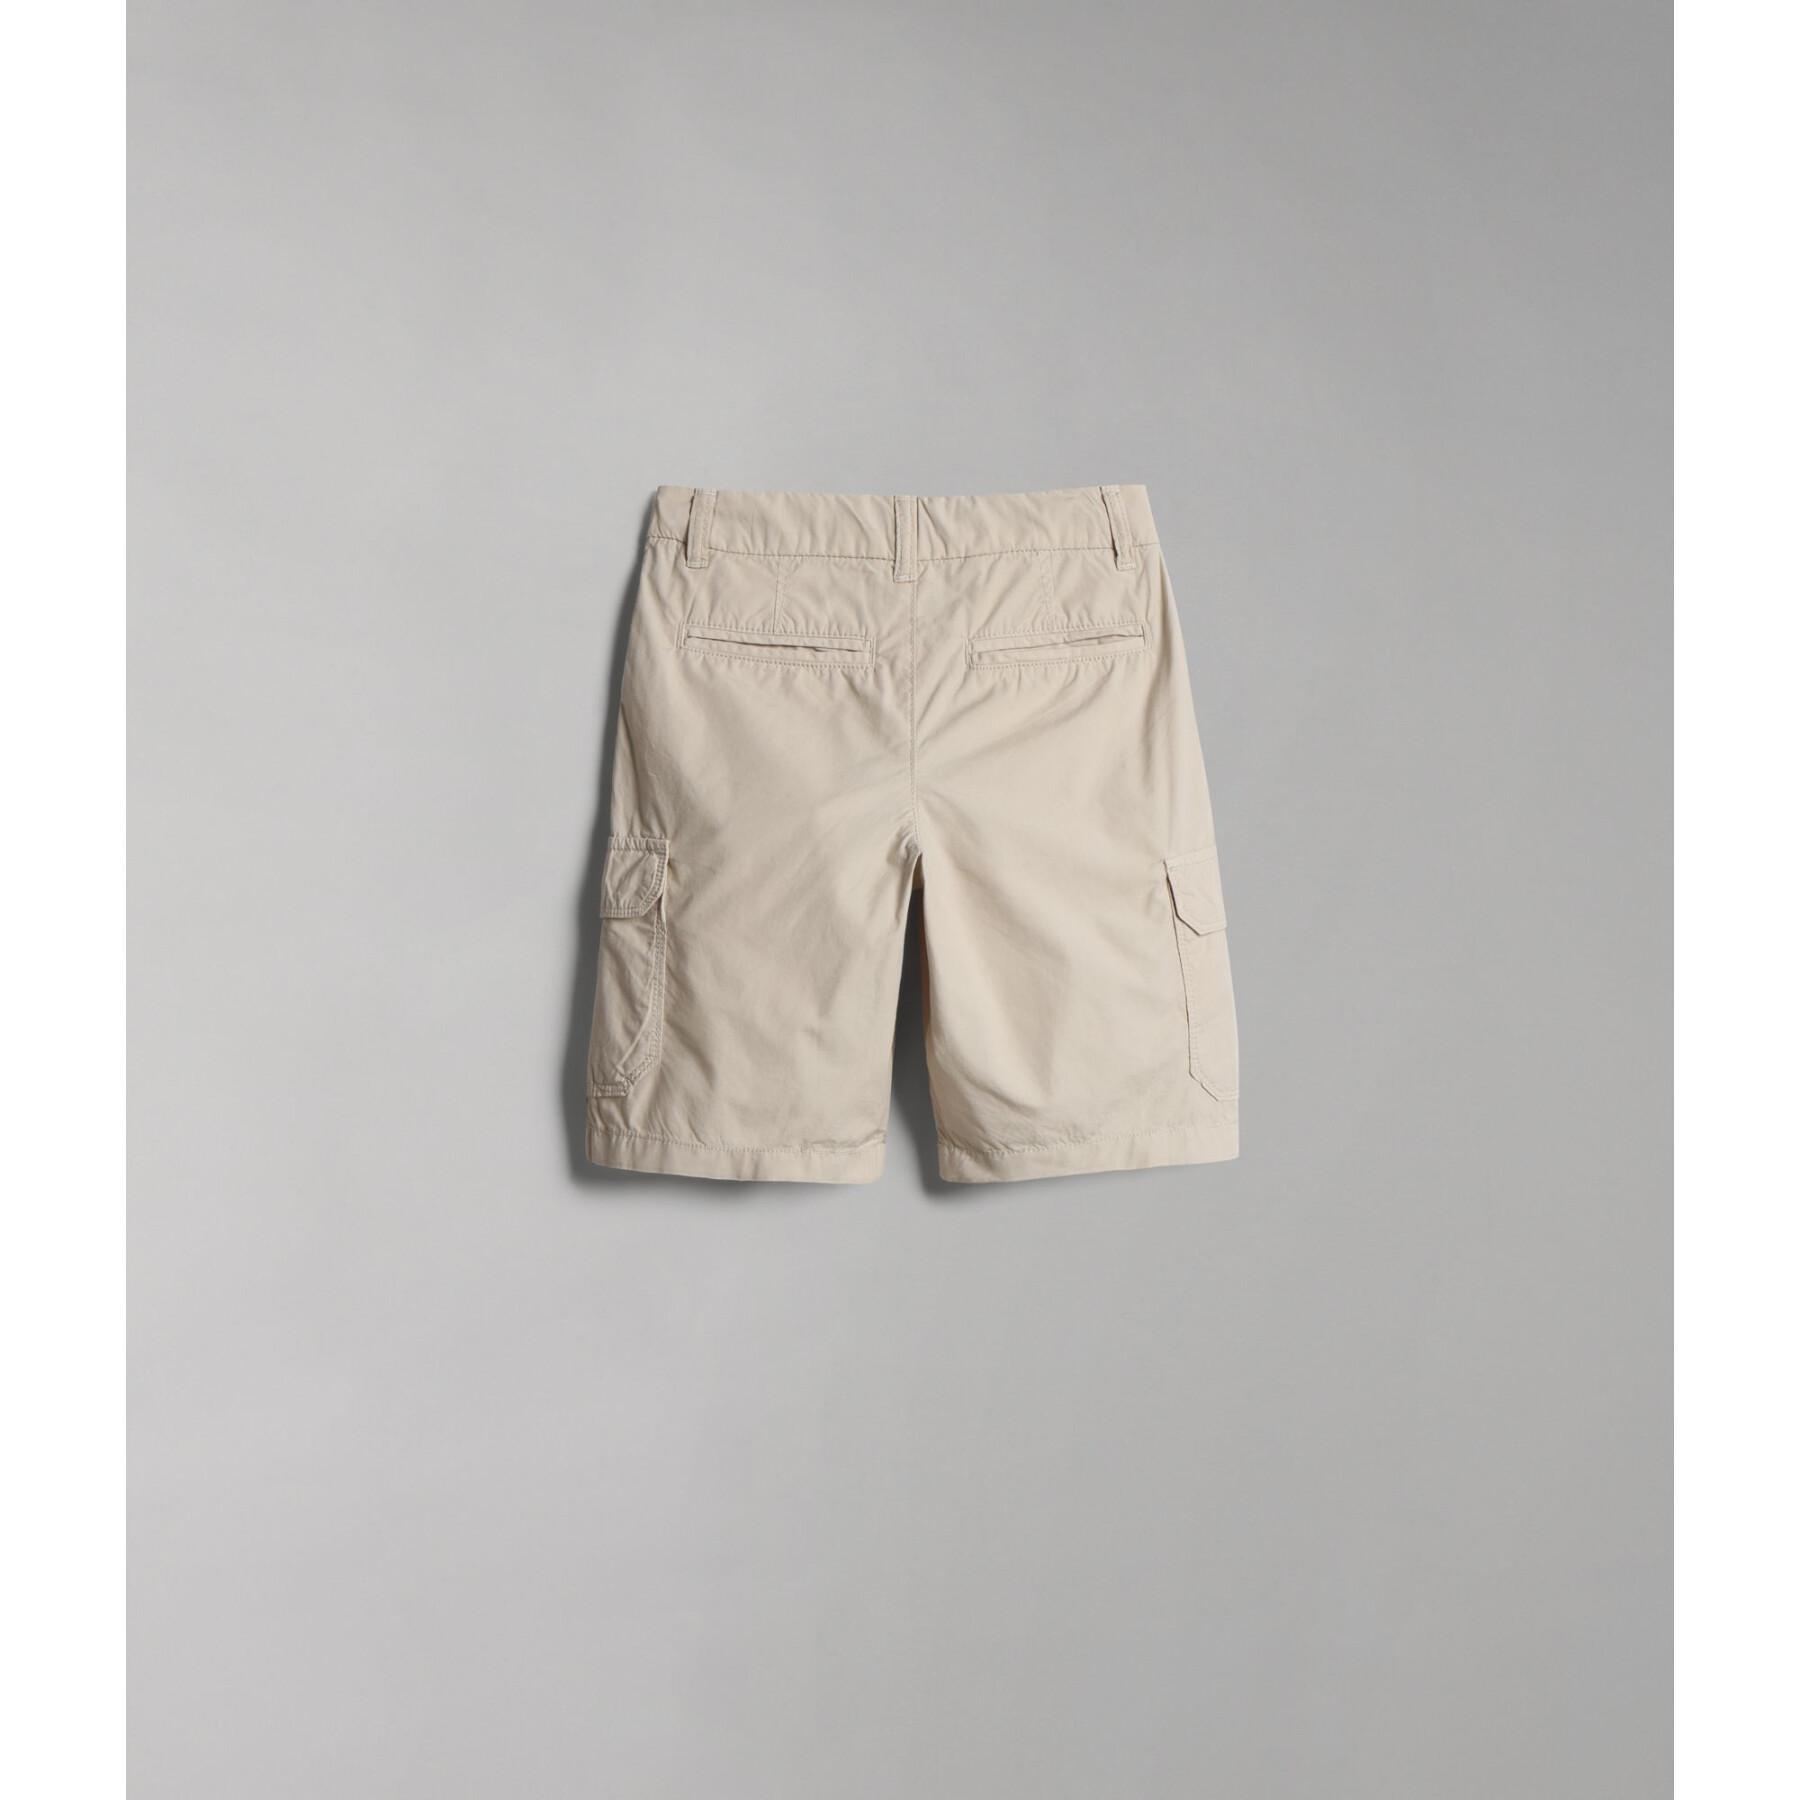 Pantaloncini per bambini Napapijri Noto